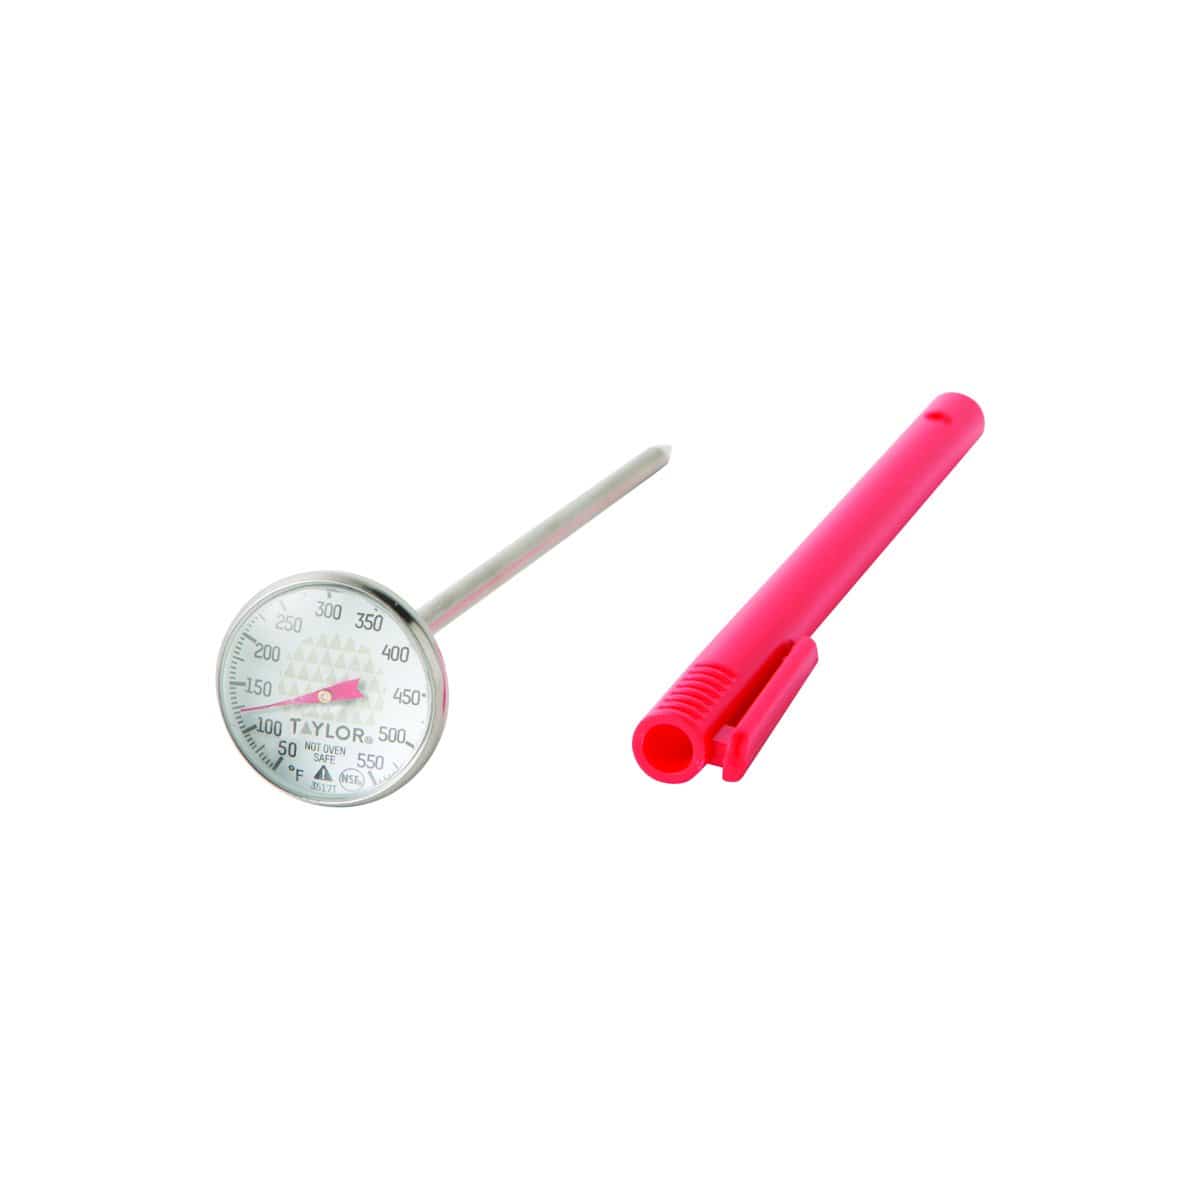 Companion Wireless Fridge Thermometer 